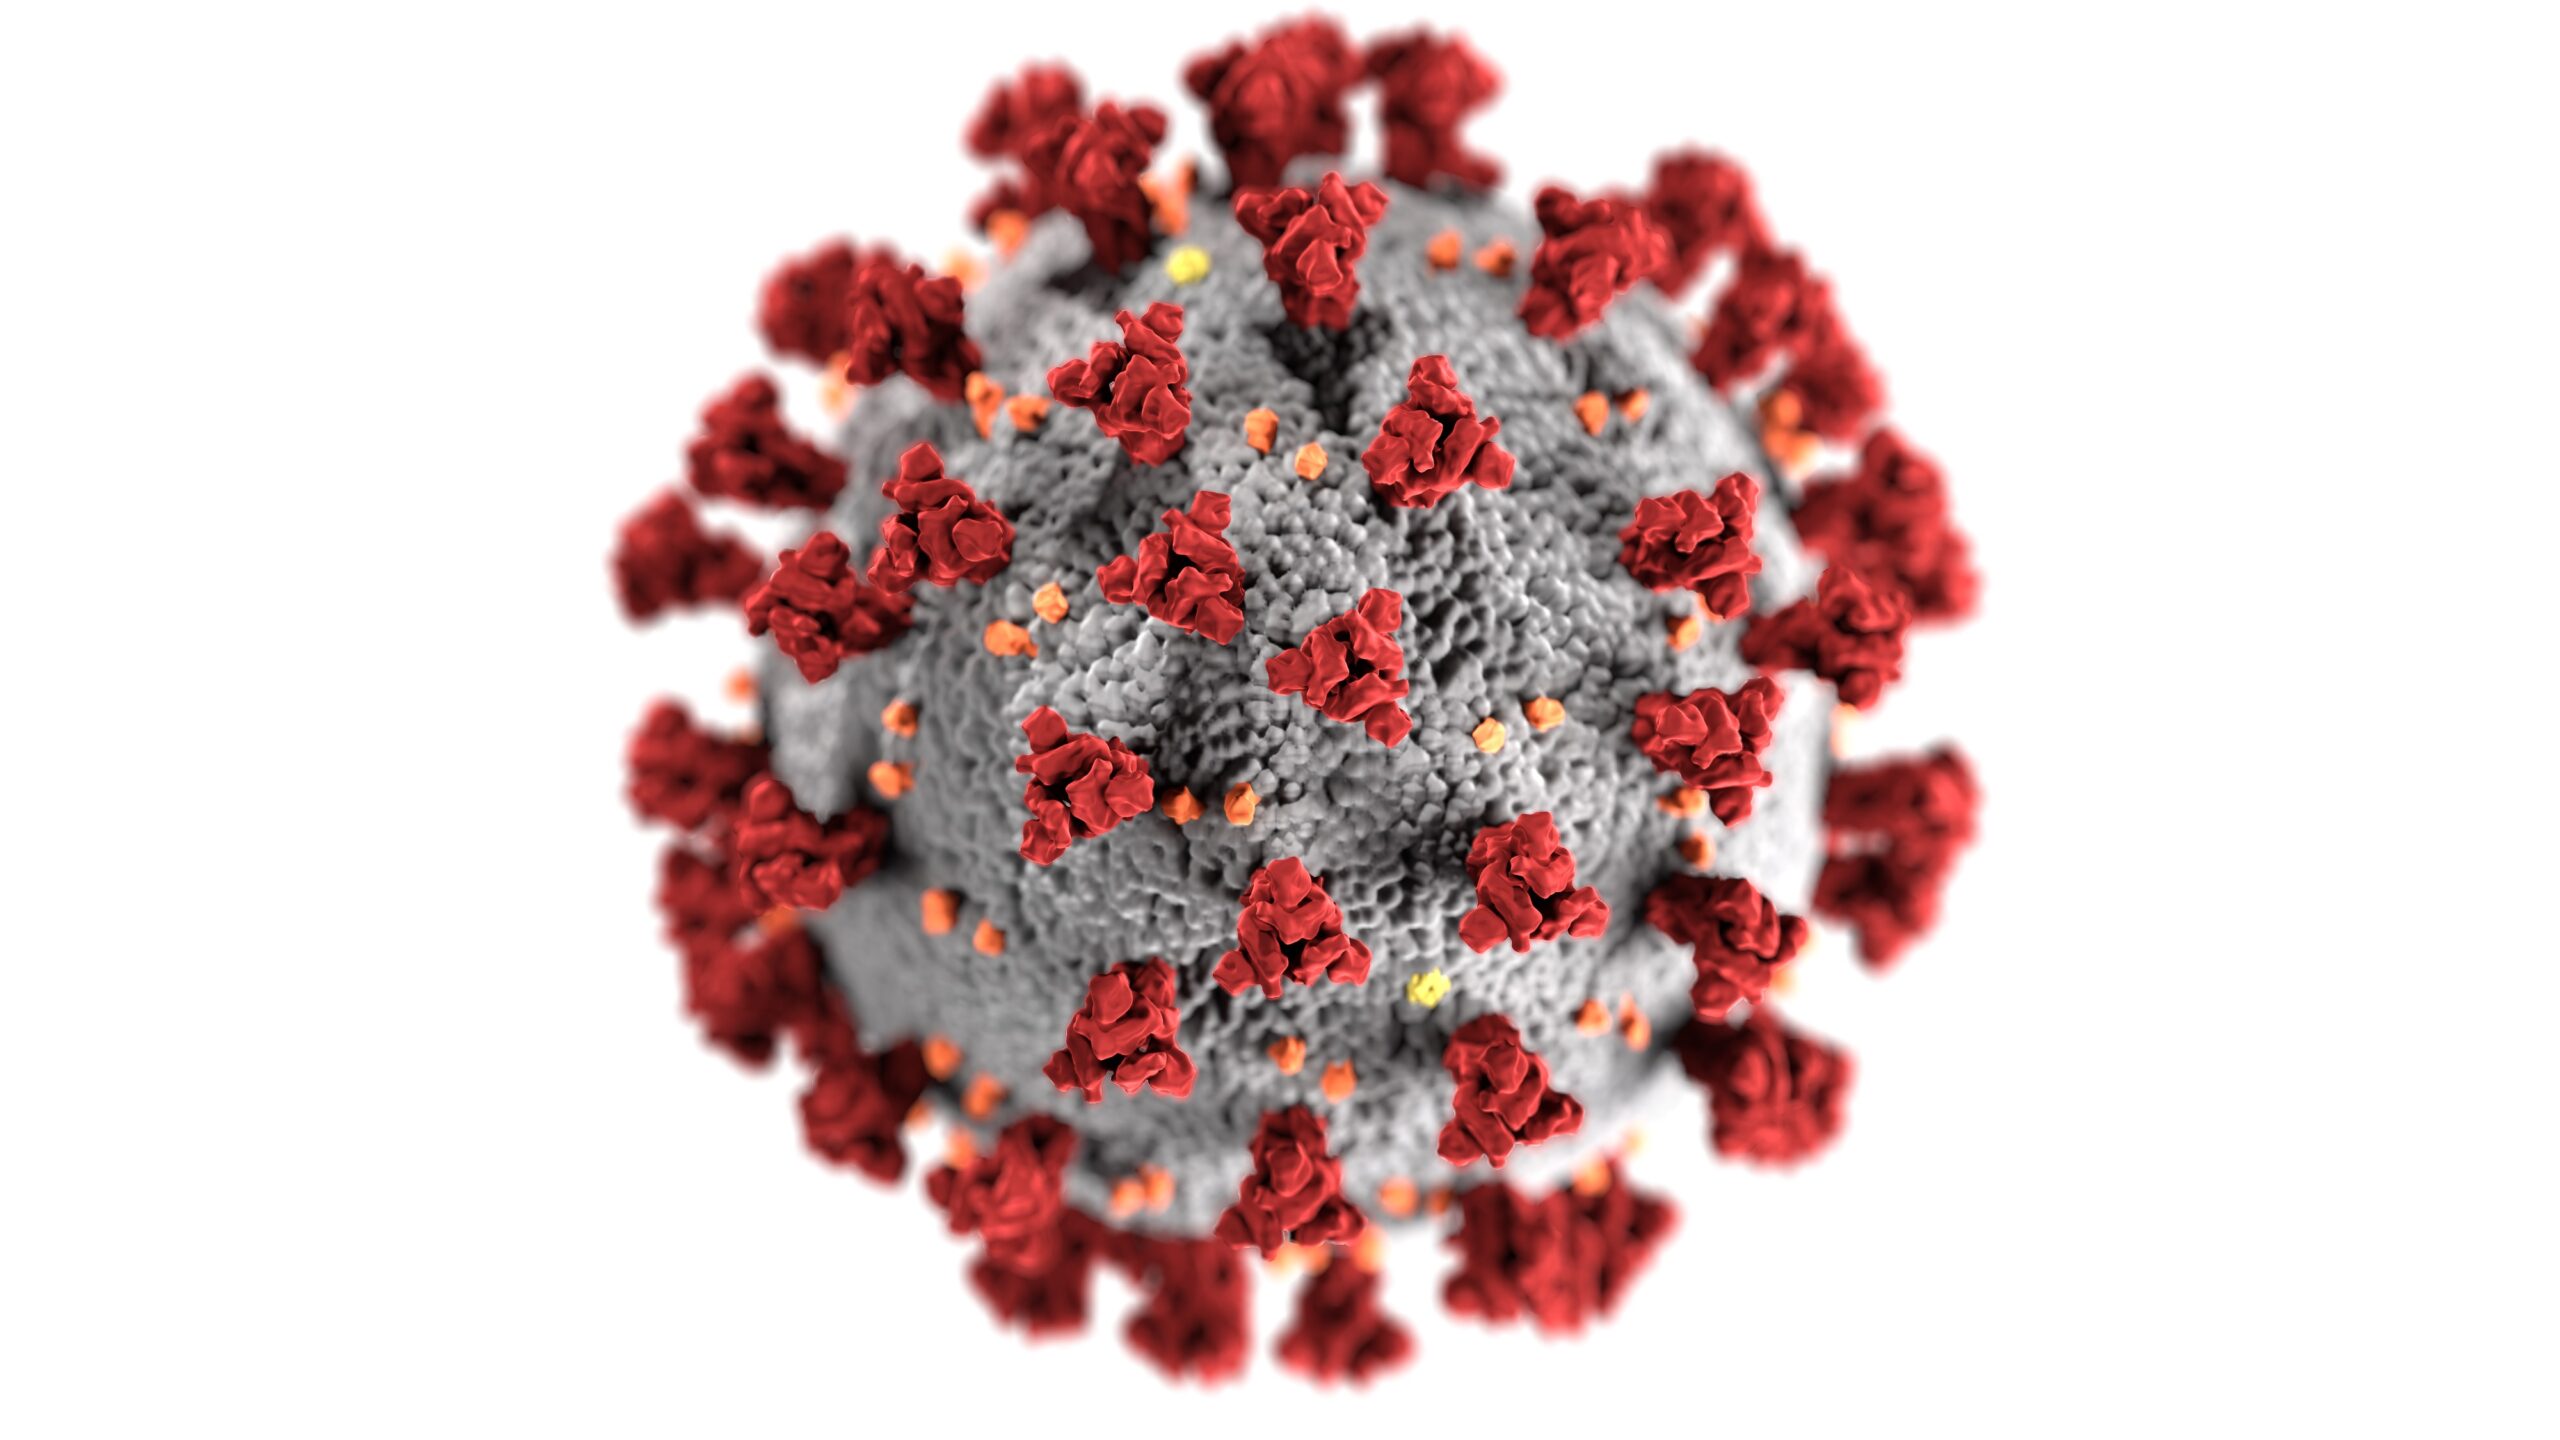 The Effect of Corona Virus Pandemic